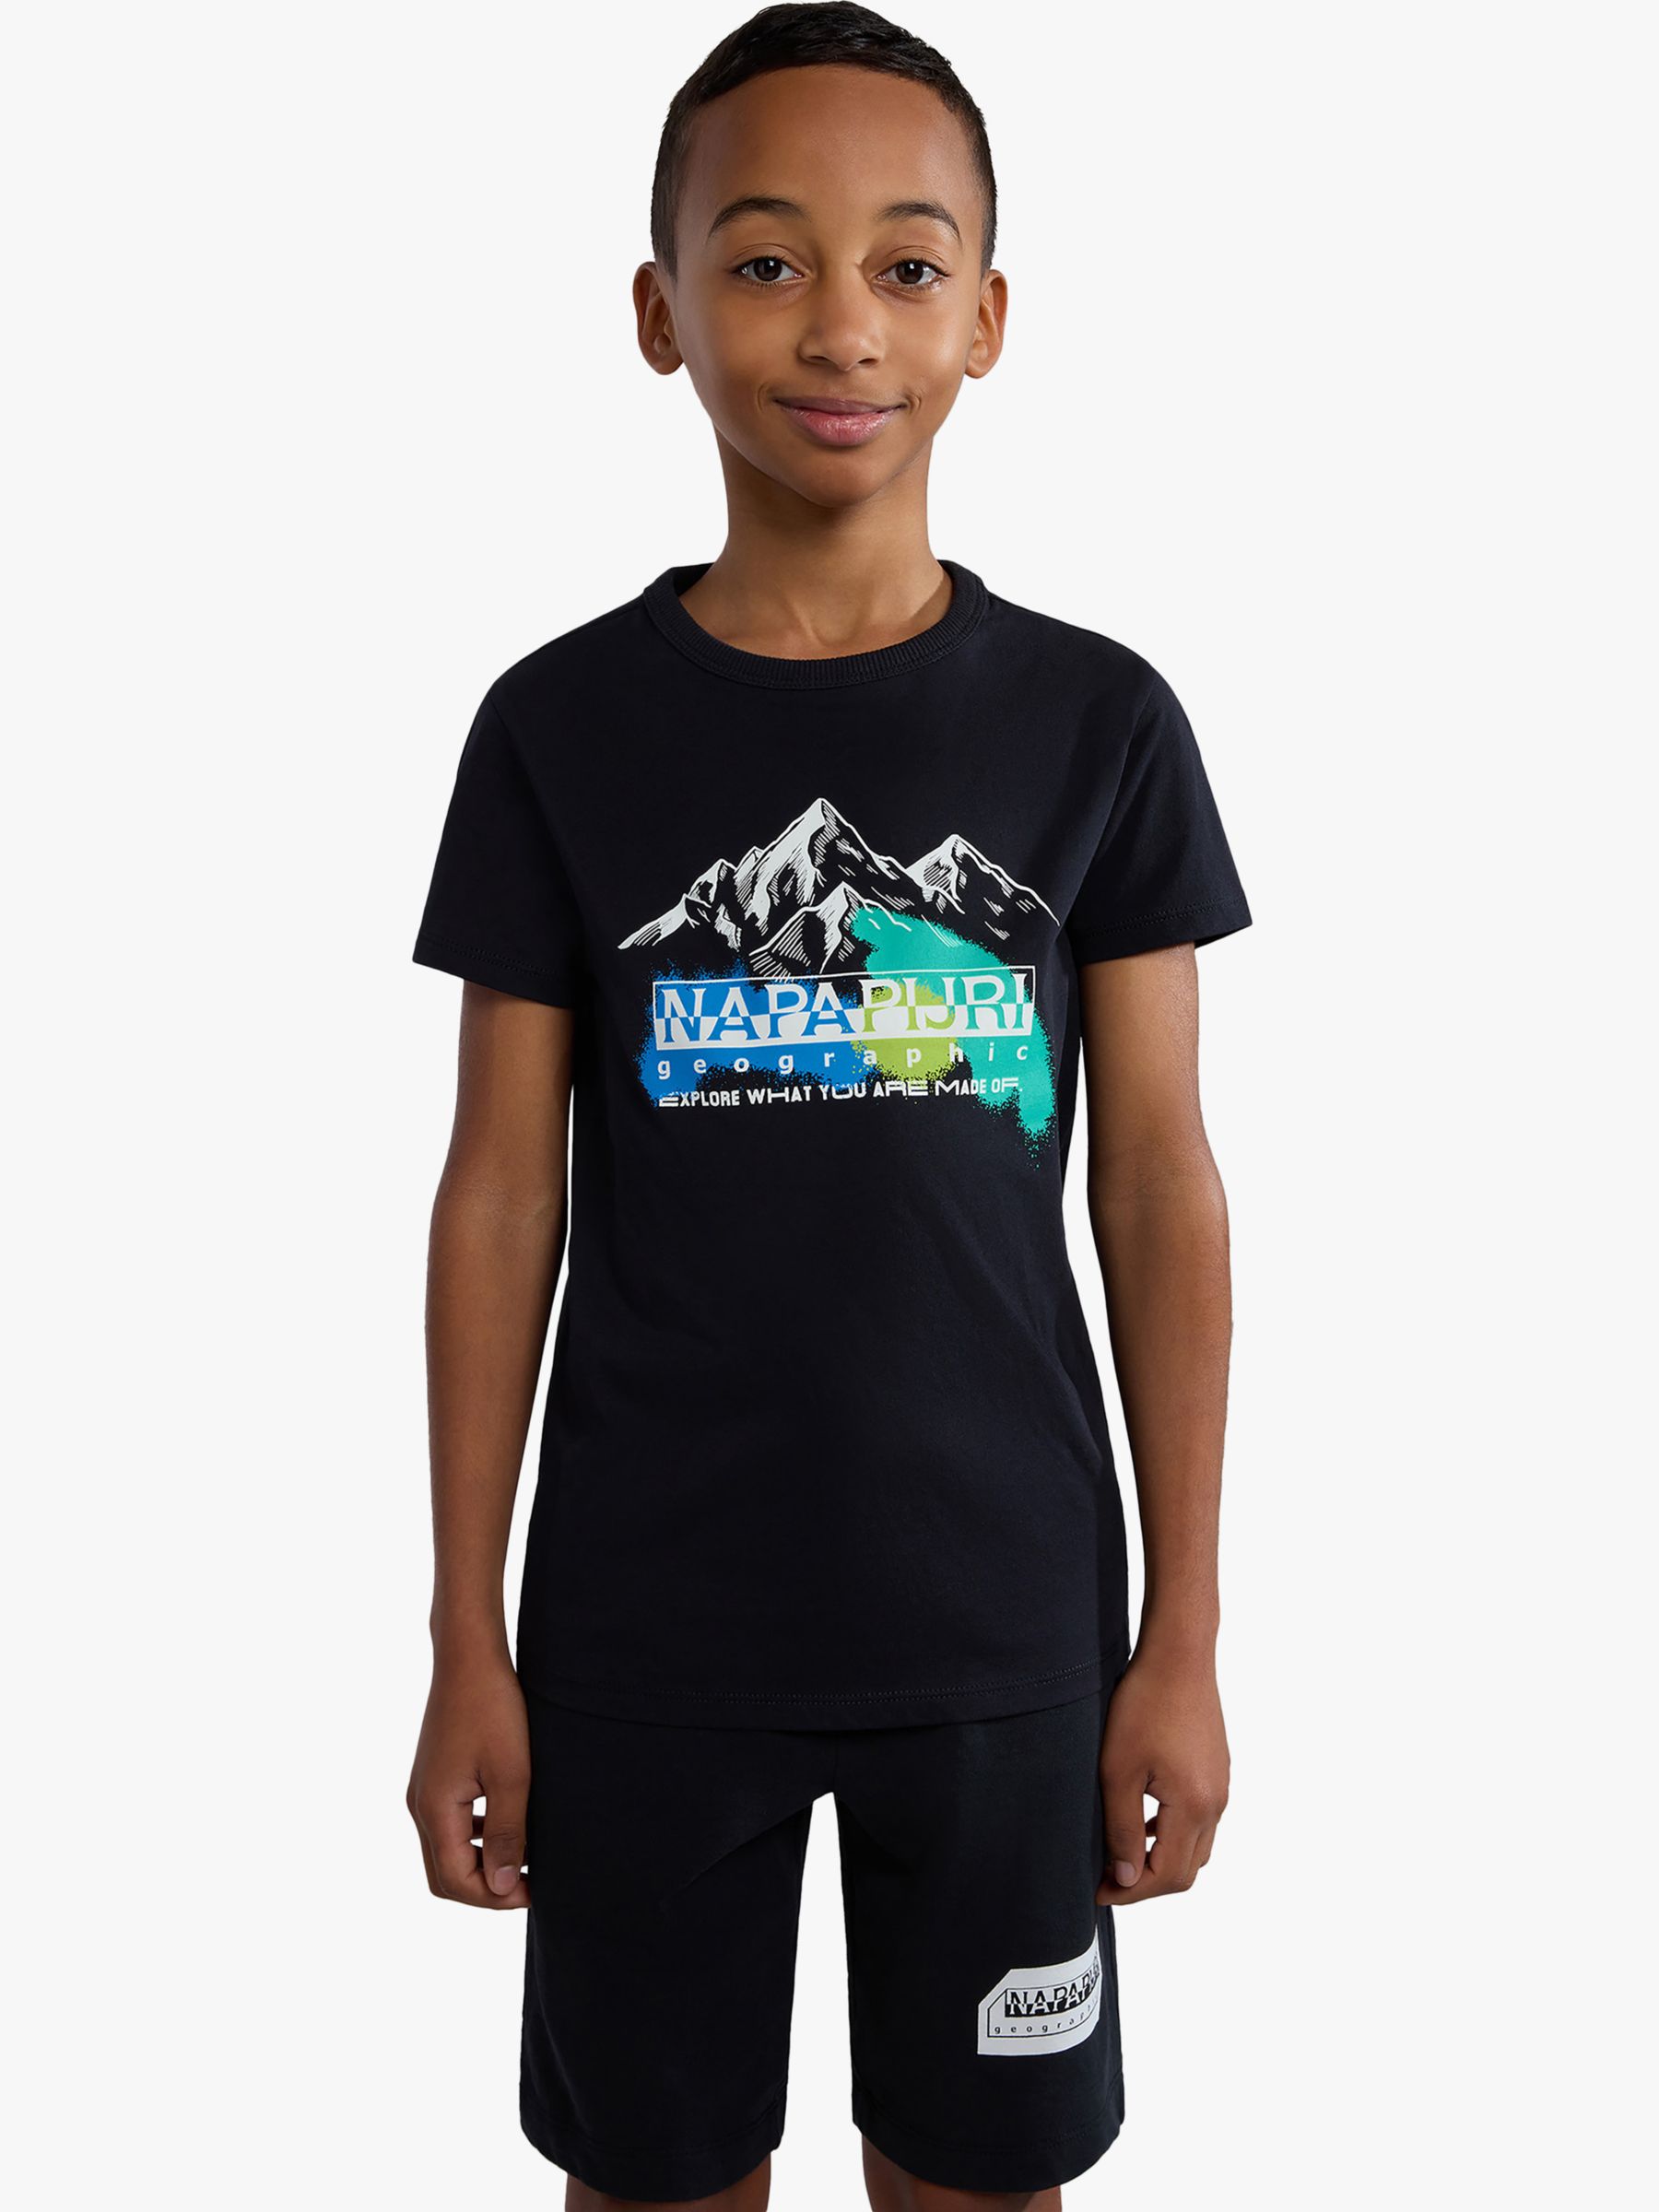 Napapijri Kids' Liard Mountain Graphic T-Shirt, Black, 8 years